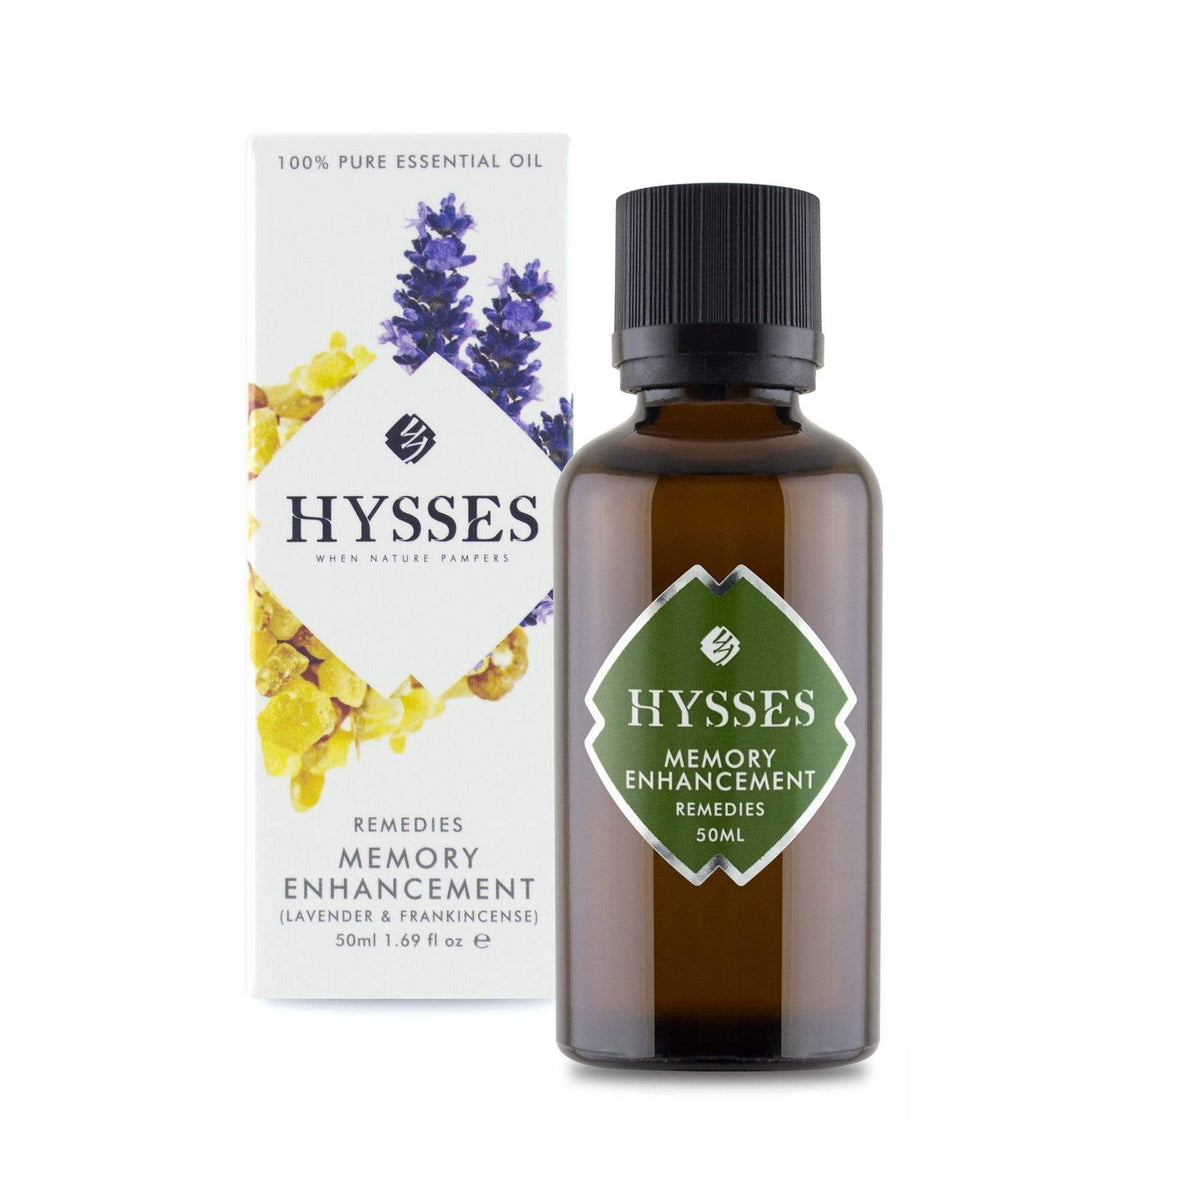 Hysses Essential Oil Remedies, Memory Enhancement